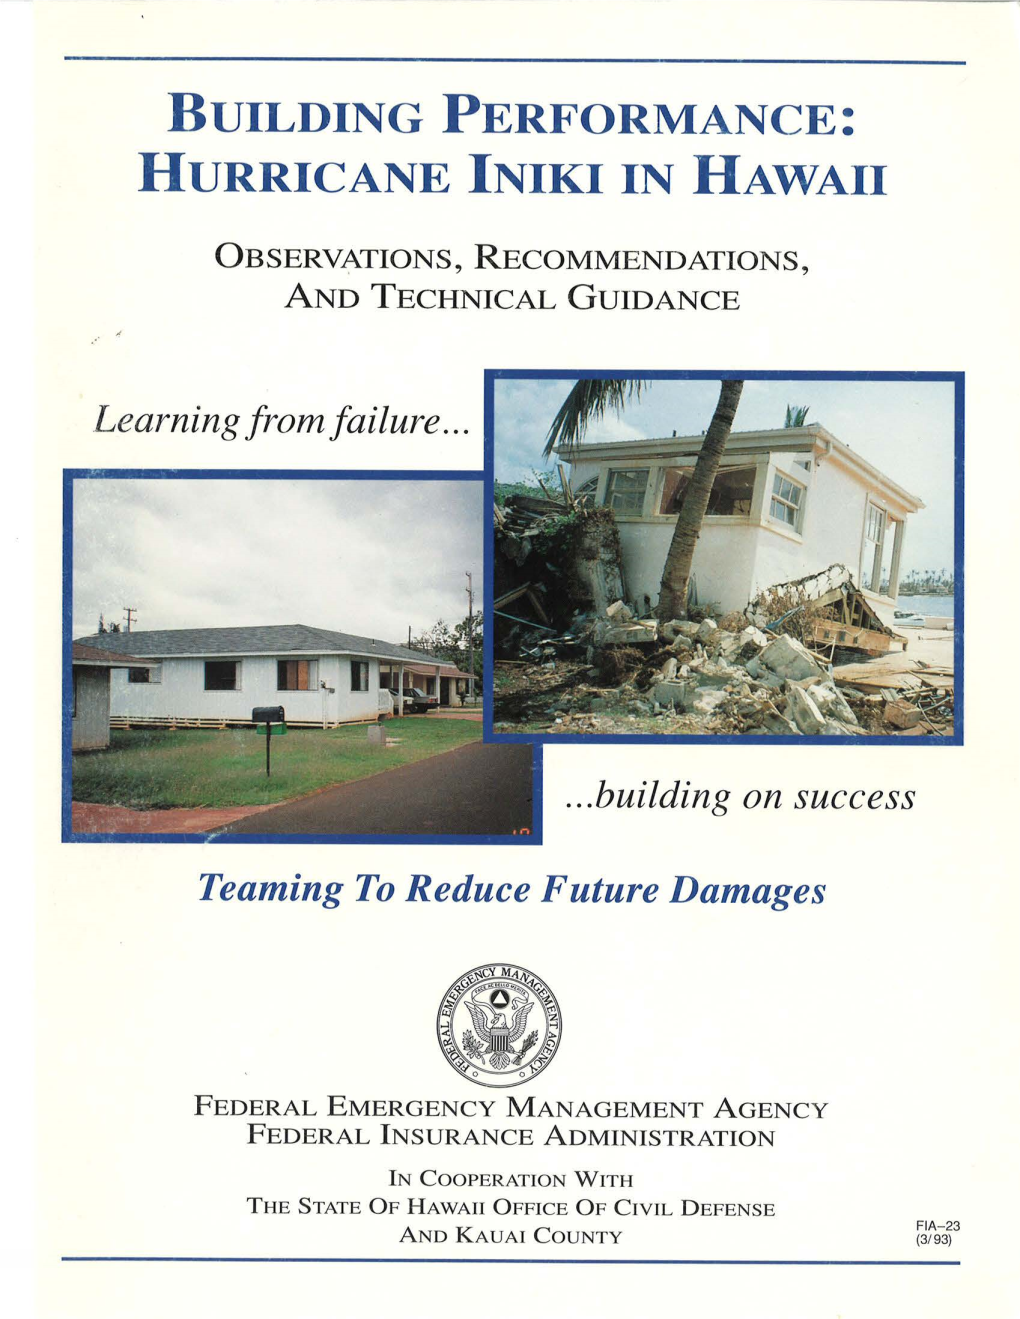 Hurricane Iniki in Hawaii